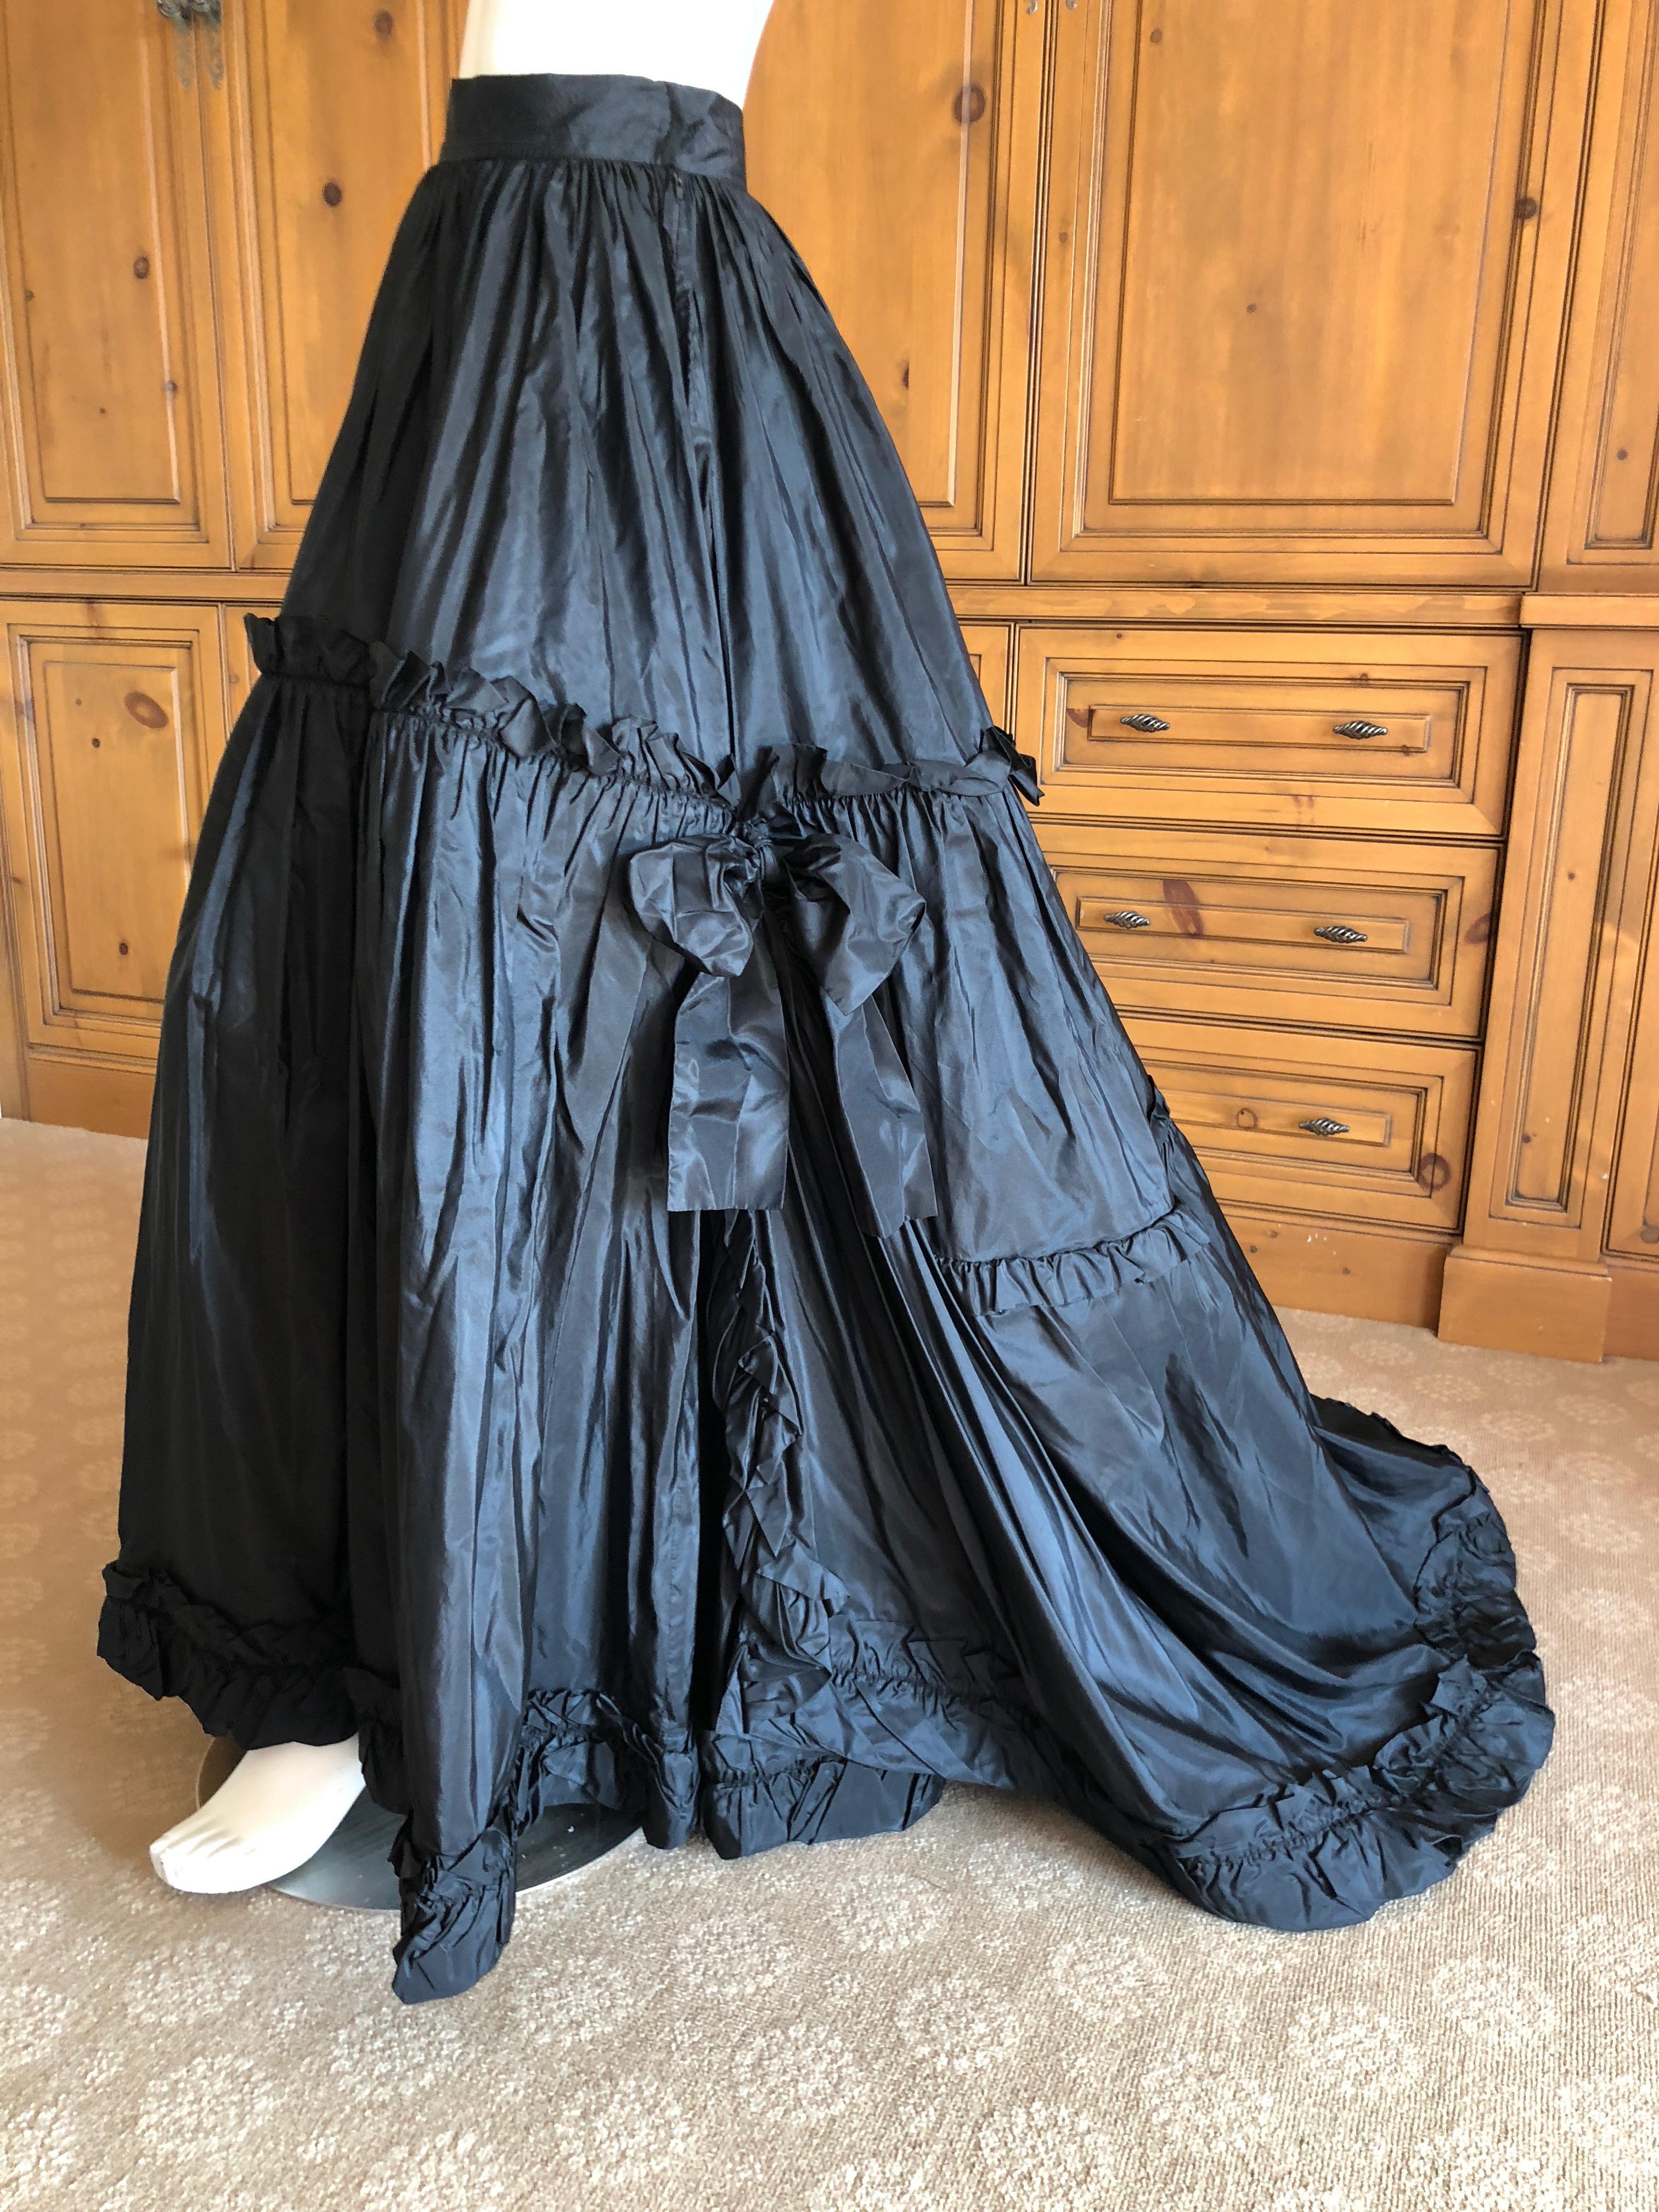 Yves Saint Laurent Rive Guache 1982 Dramatic Black Taffeta Ball Skirt with Train For Sale 3